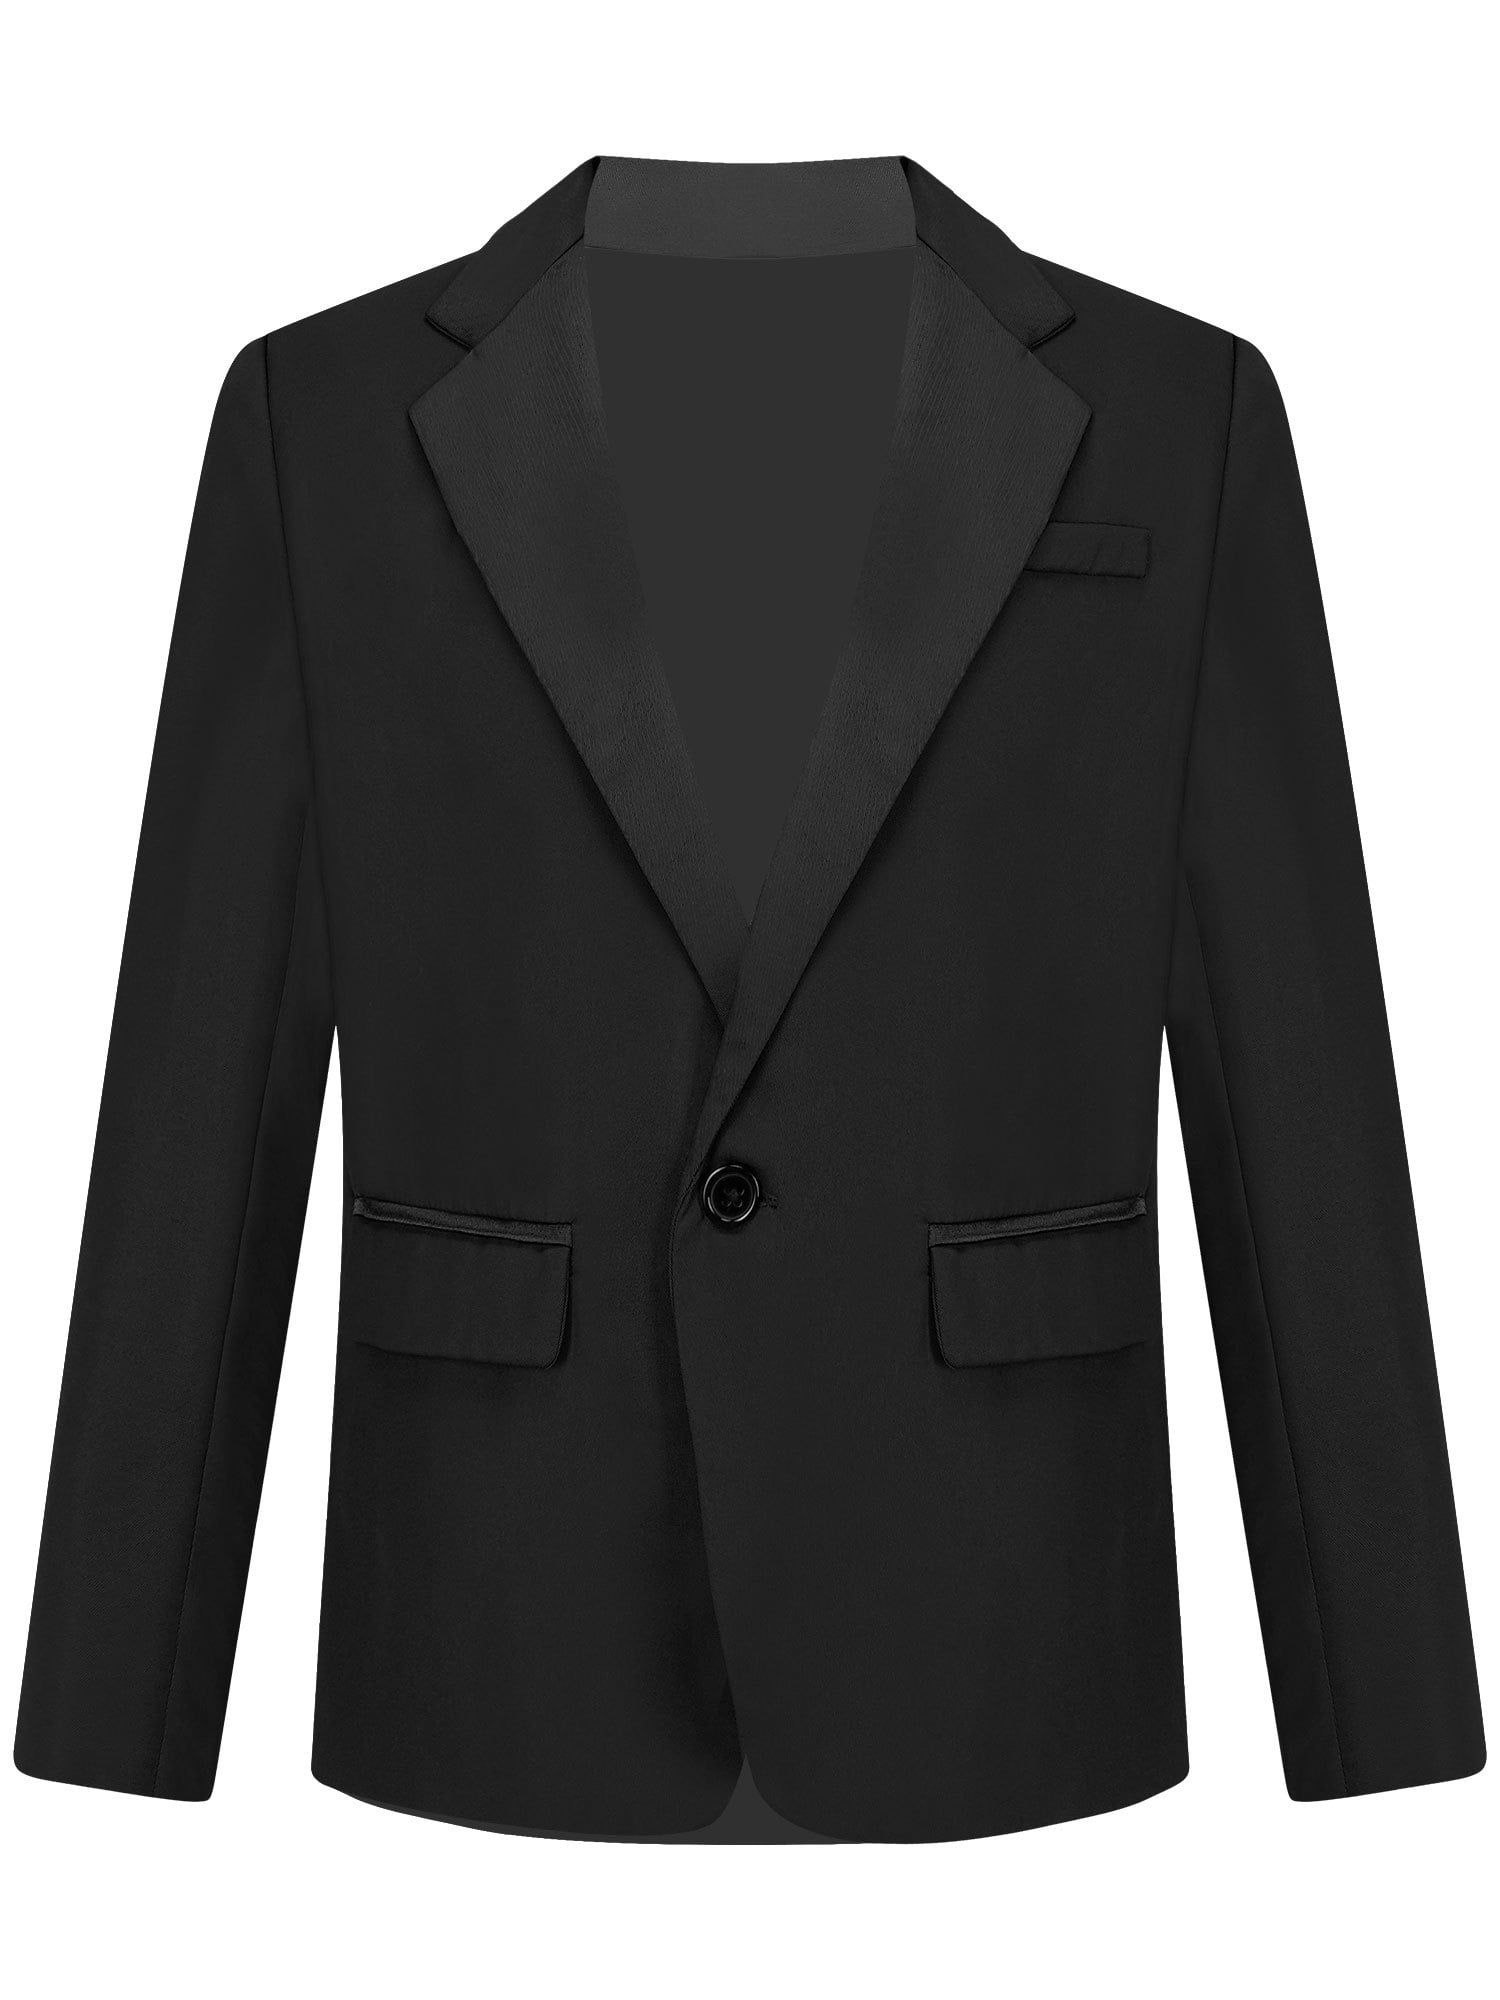 TTAO Boys Sport Blazer Classic Fit Lapel Suit Jacket Single Breasted ...